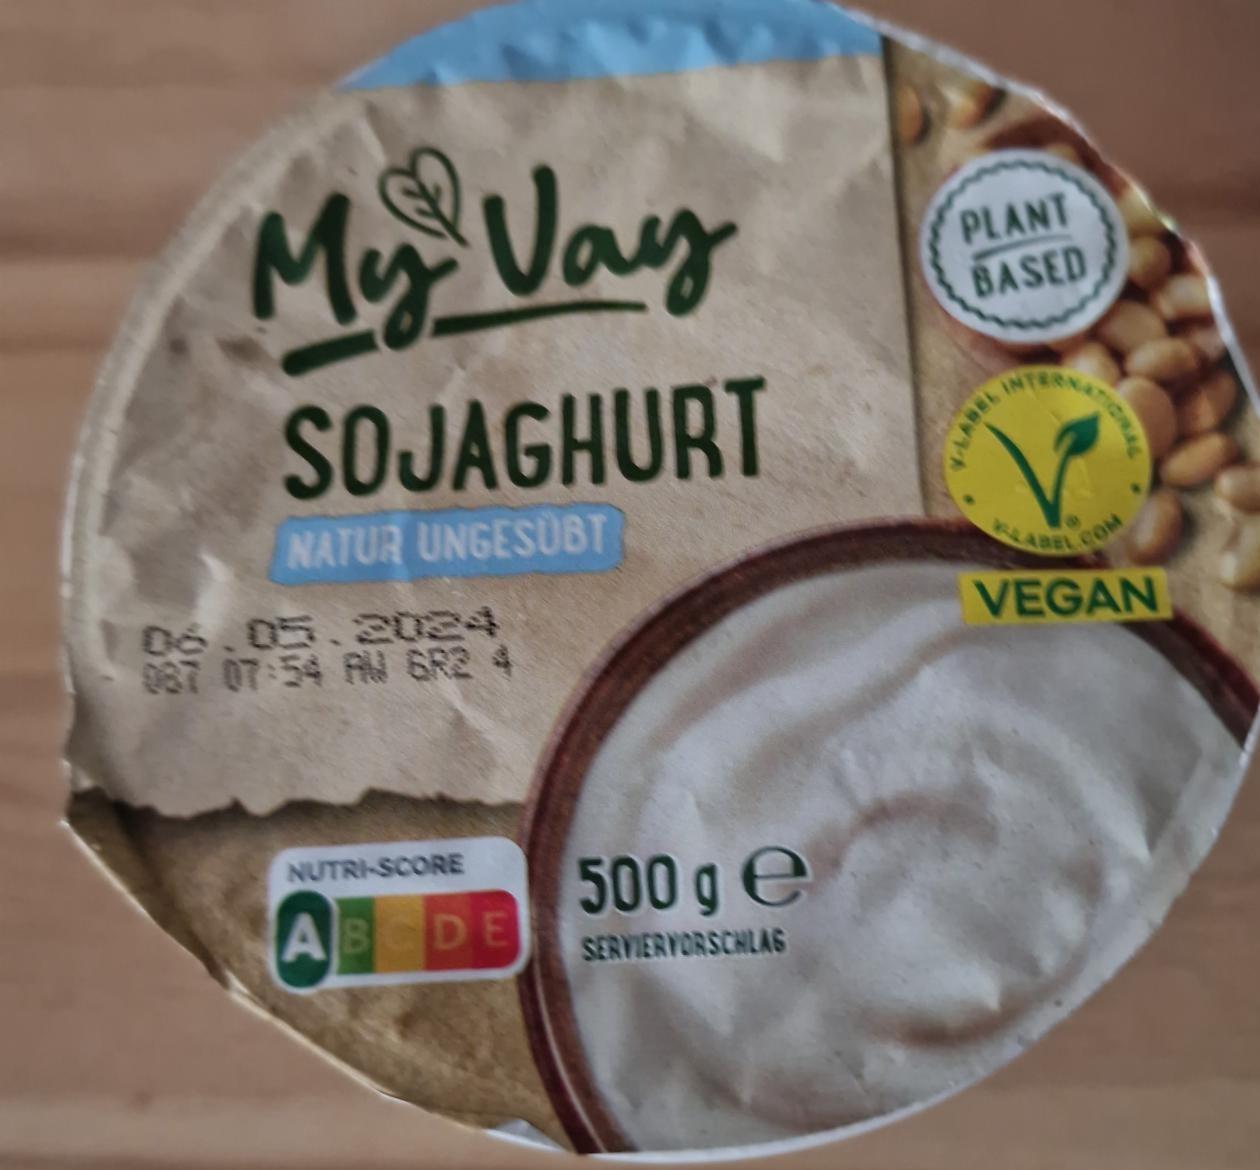 Fotografie - Sojaghurt Natur ungesüßt MyVay